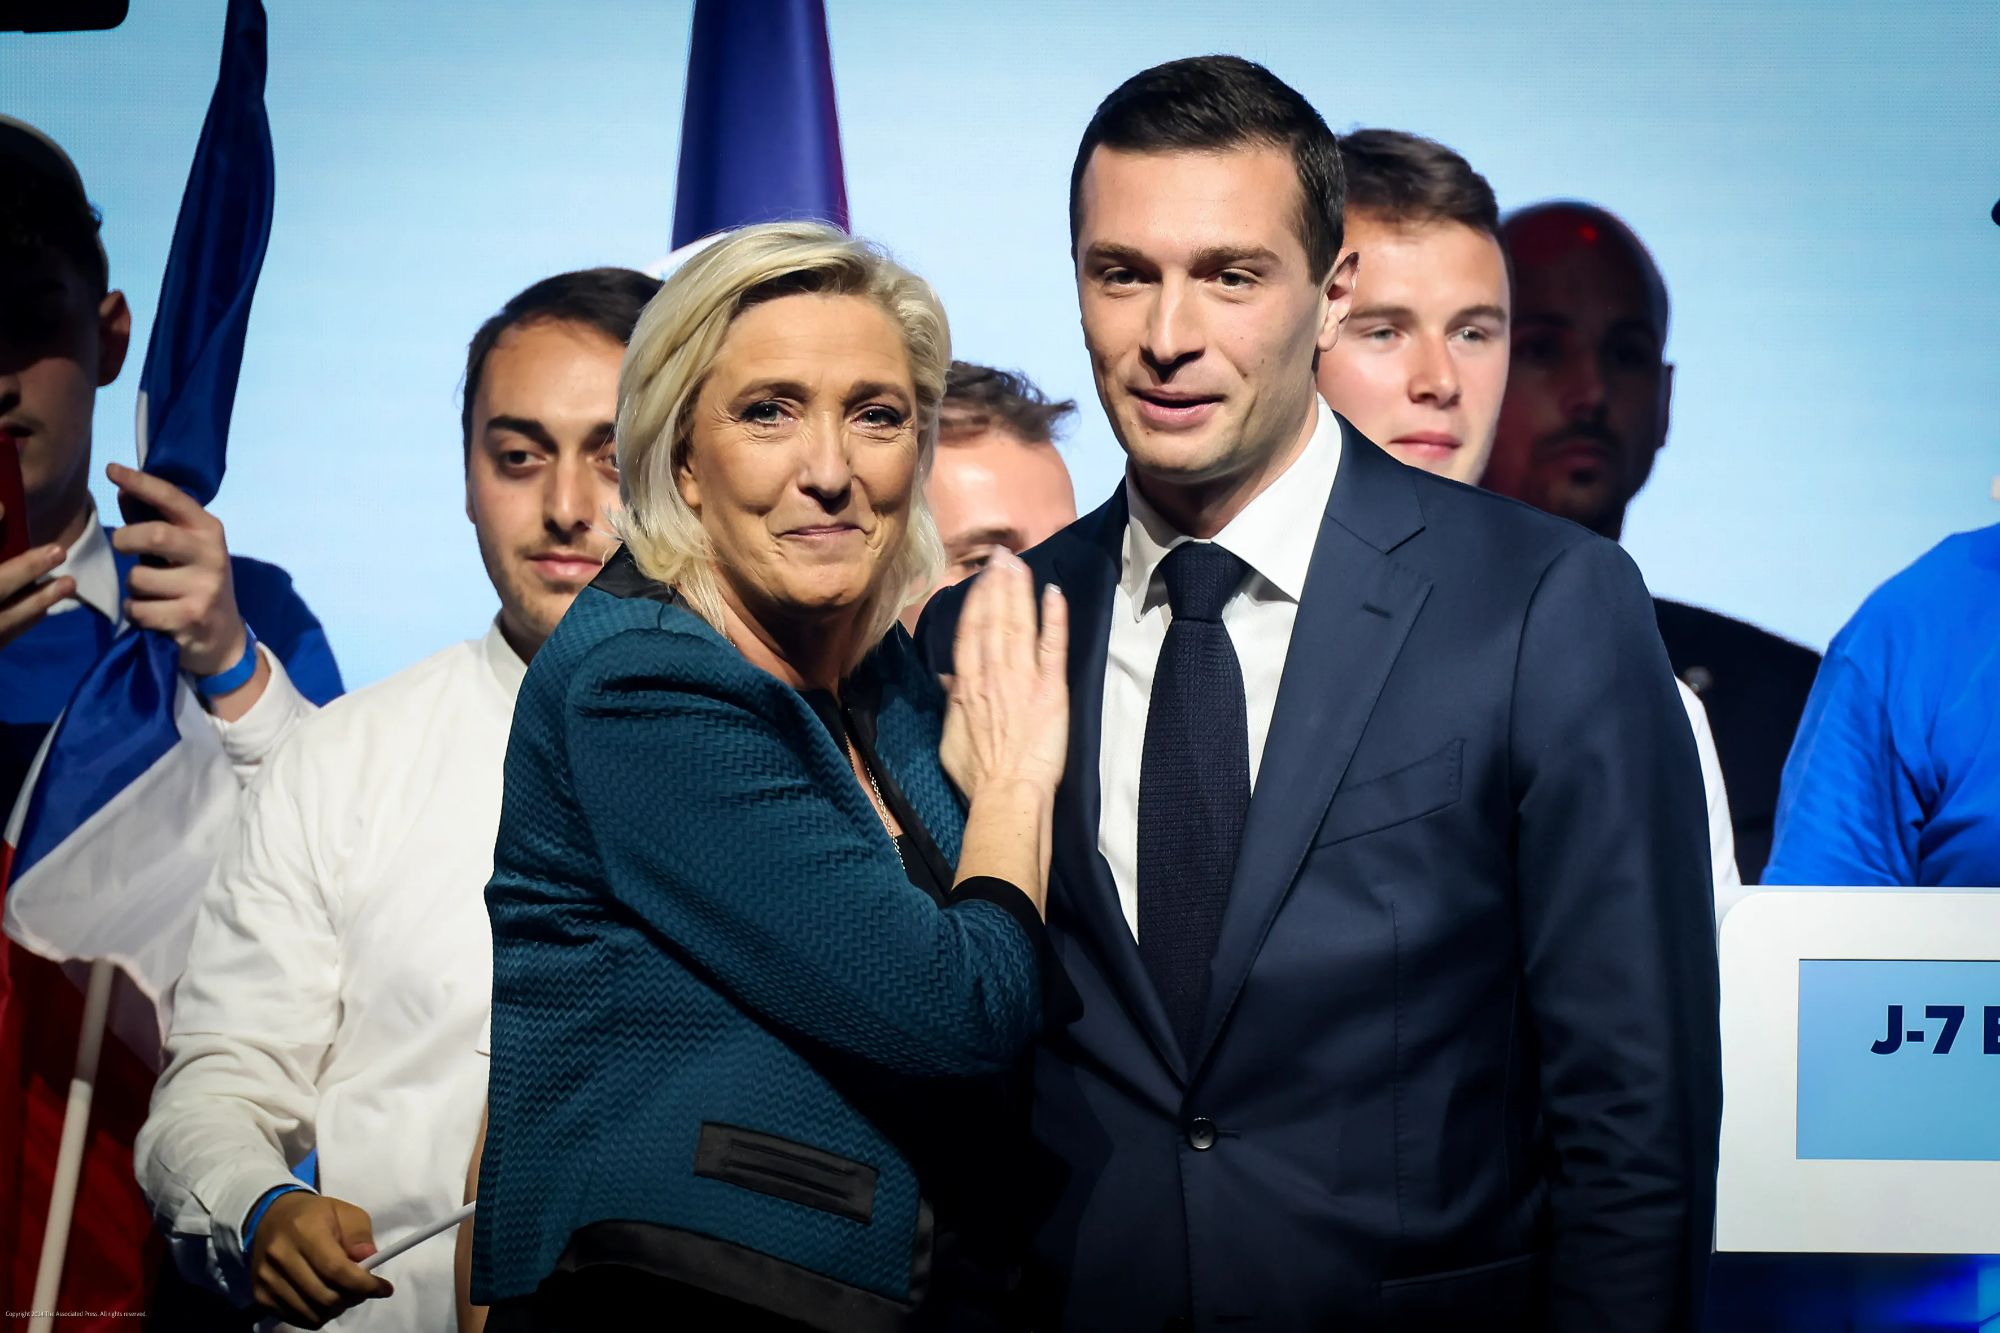 Bardella is a close ally of RN's Marine Le Pen